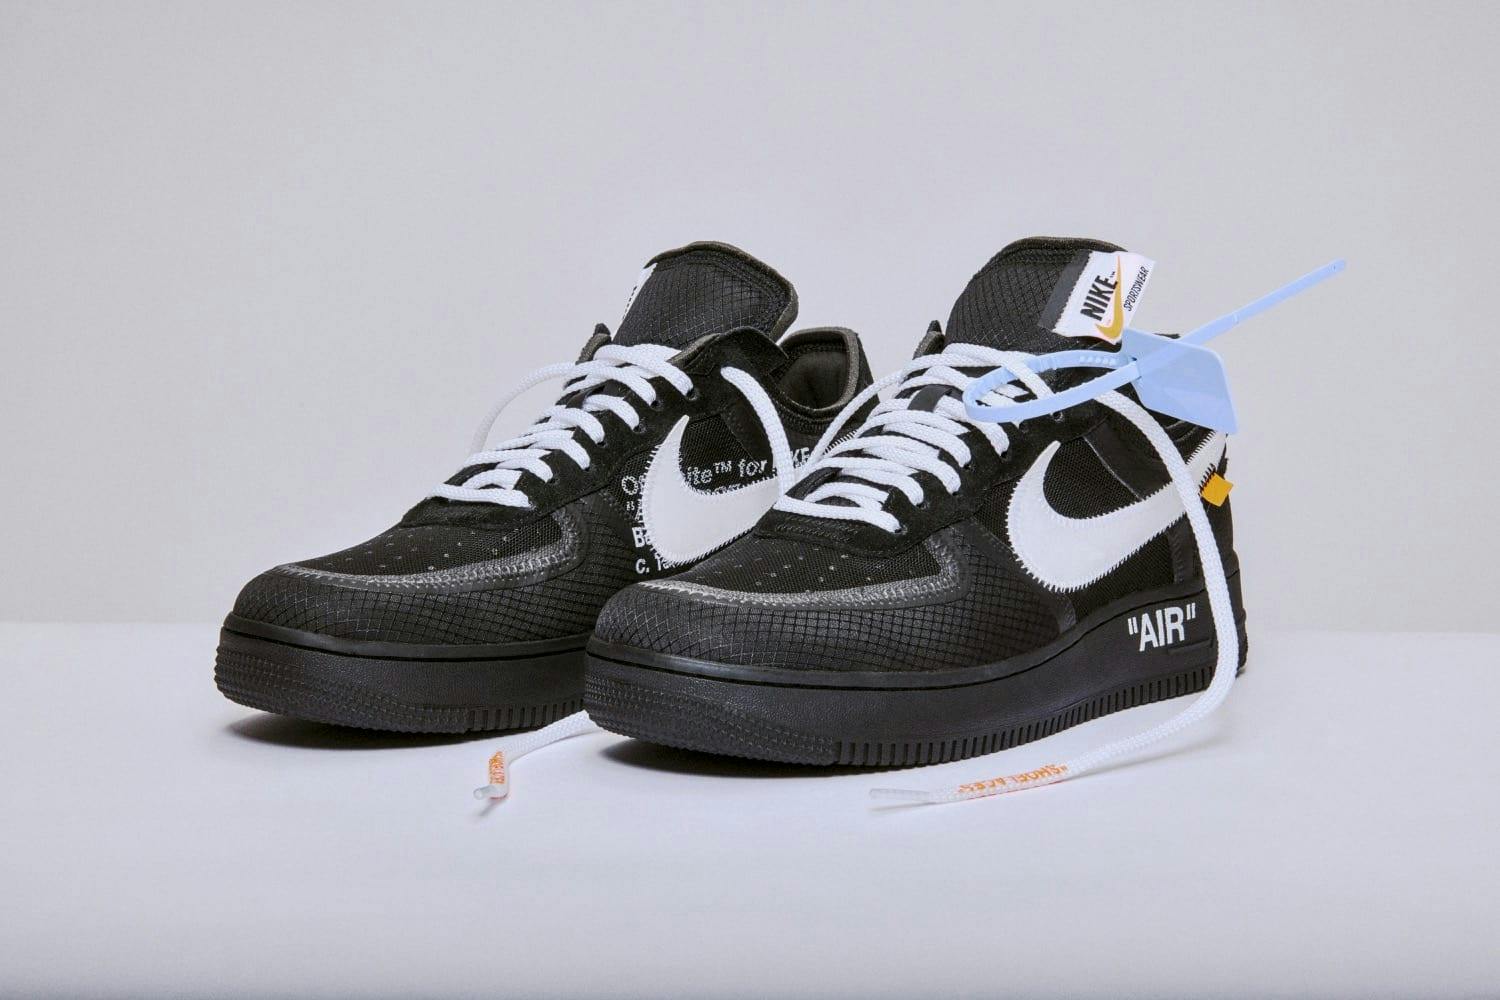 Virgil Abloh's Louis Vuitton X Nike Air Force 1 Collection Drops July 19